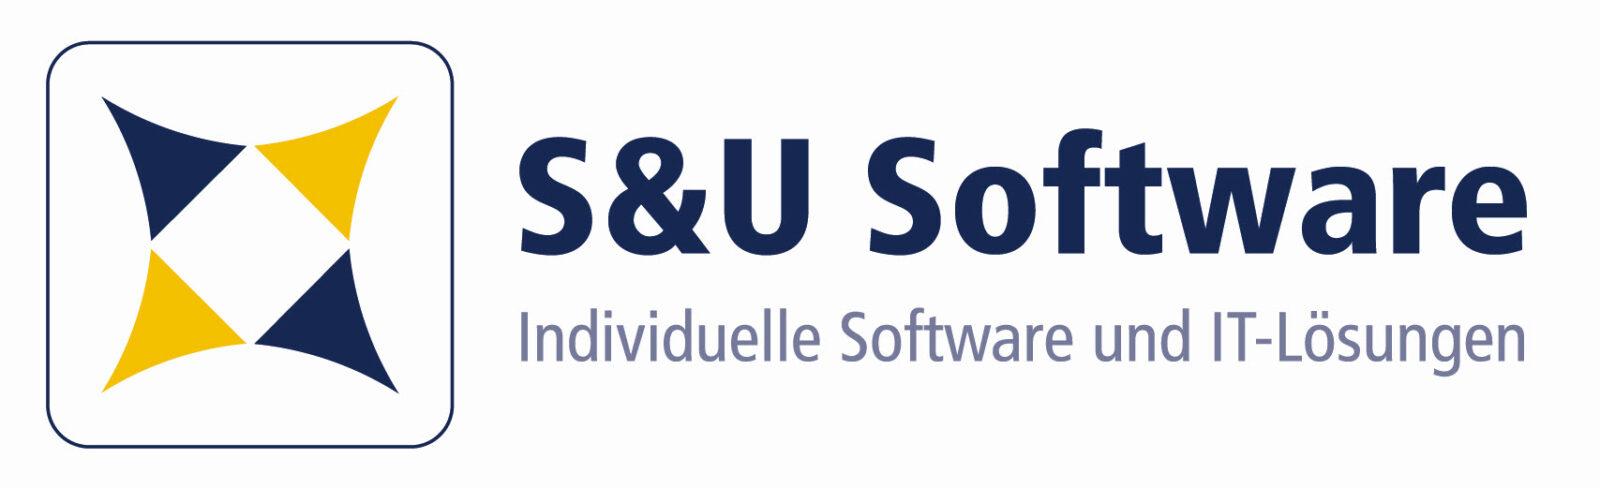 S & U Software